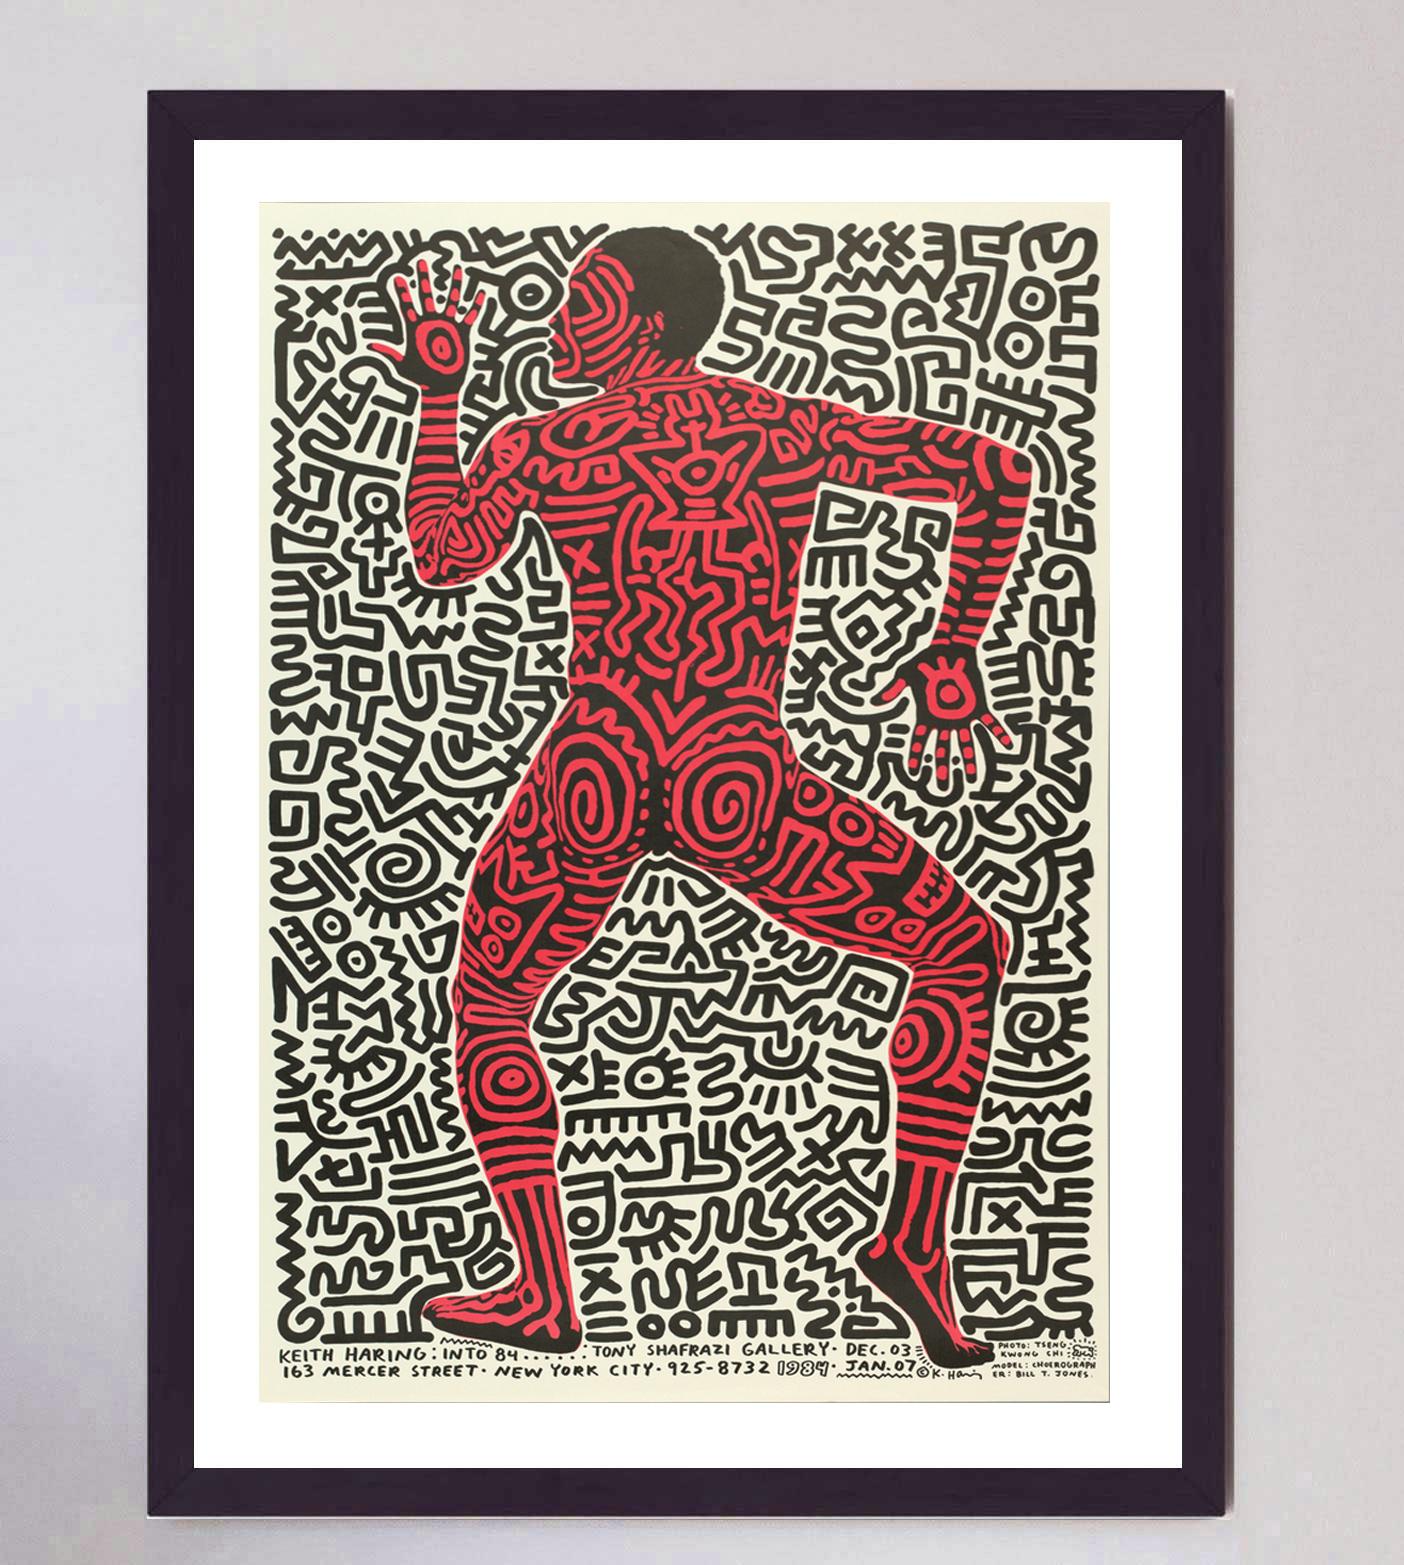 Fin du 20e siècle 1983 Keith Haring, Into 84 Original Vintage Poster